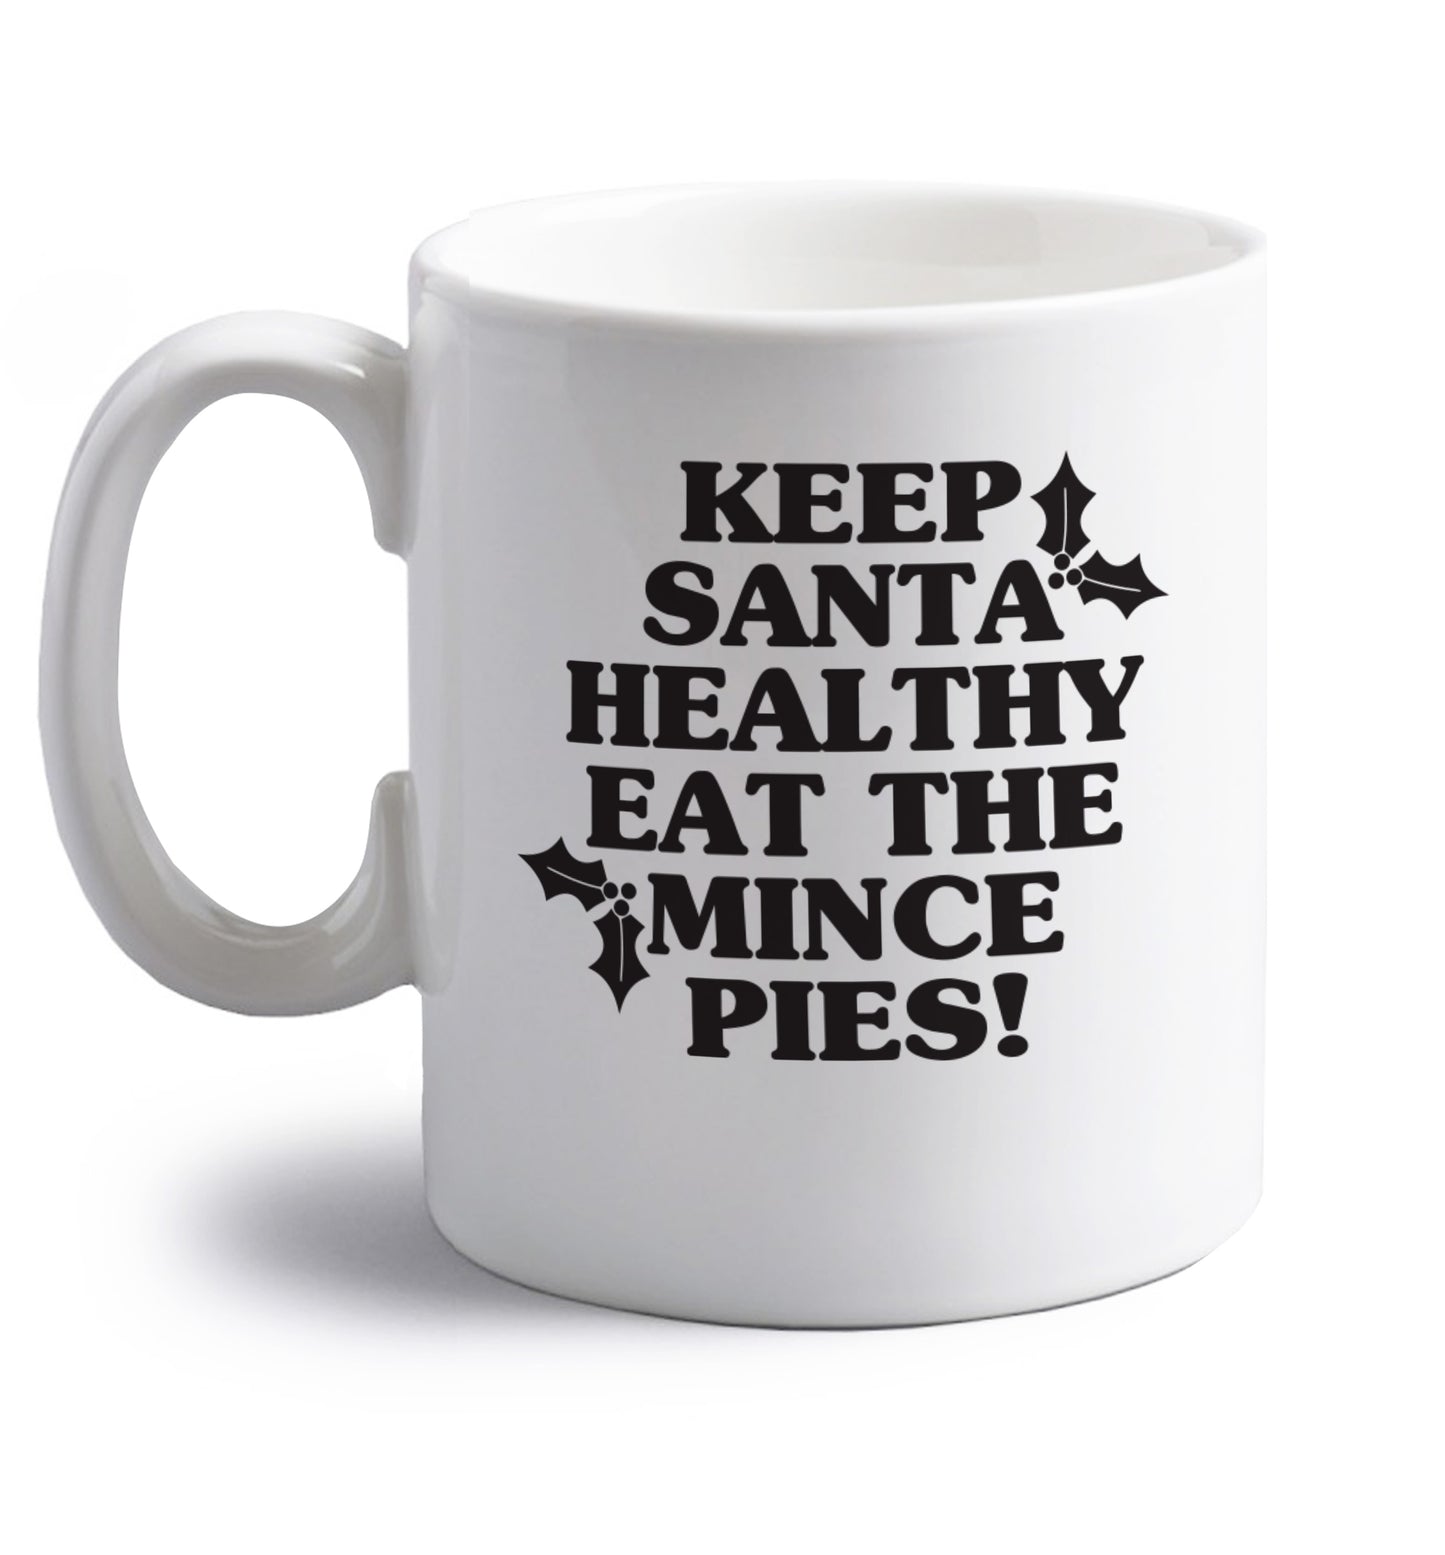 Keep santa healthy eat the mince pies right handed white ceramic mug 